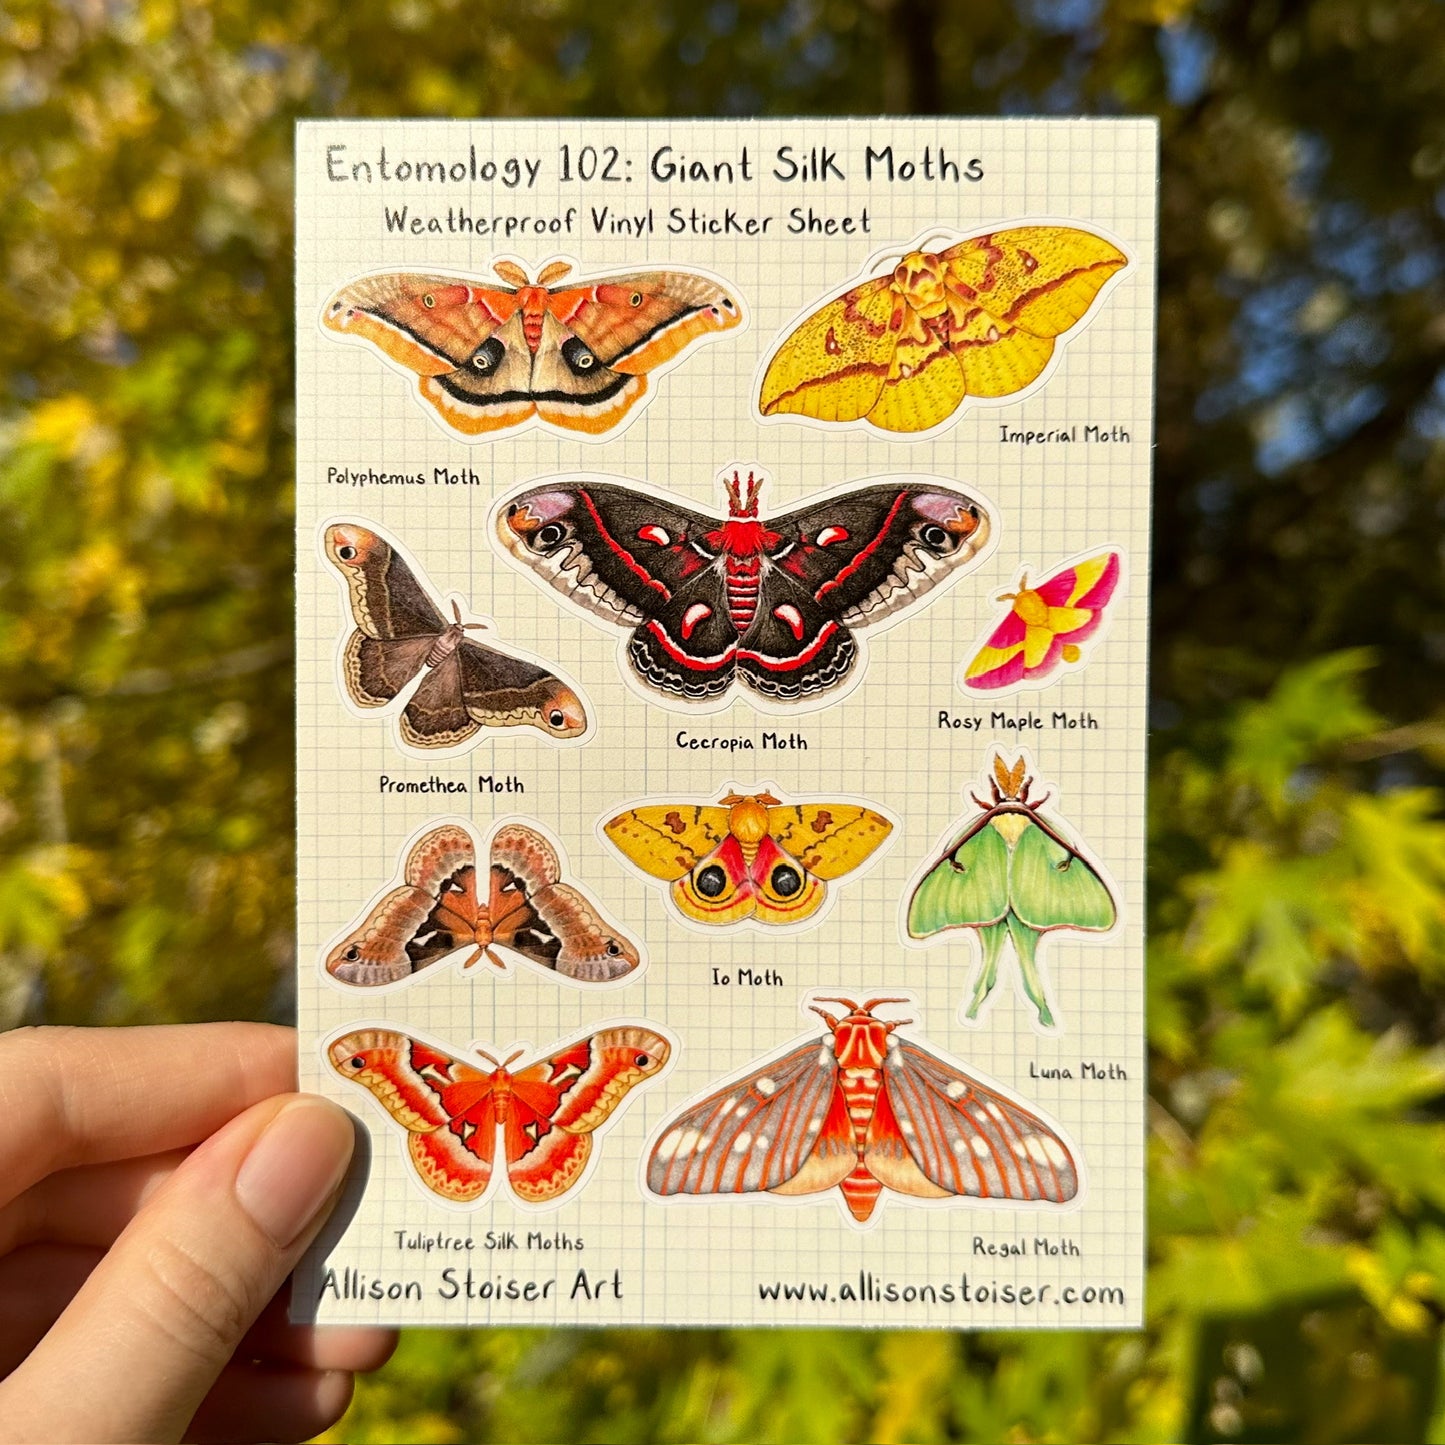 Entomology 102: Giant Silk Moths Weatherproof Vinyl Sticker Sheet